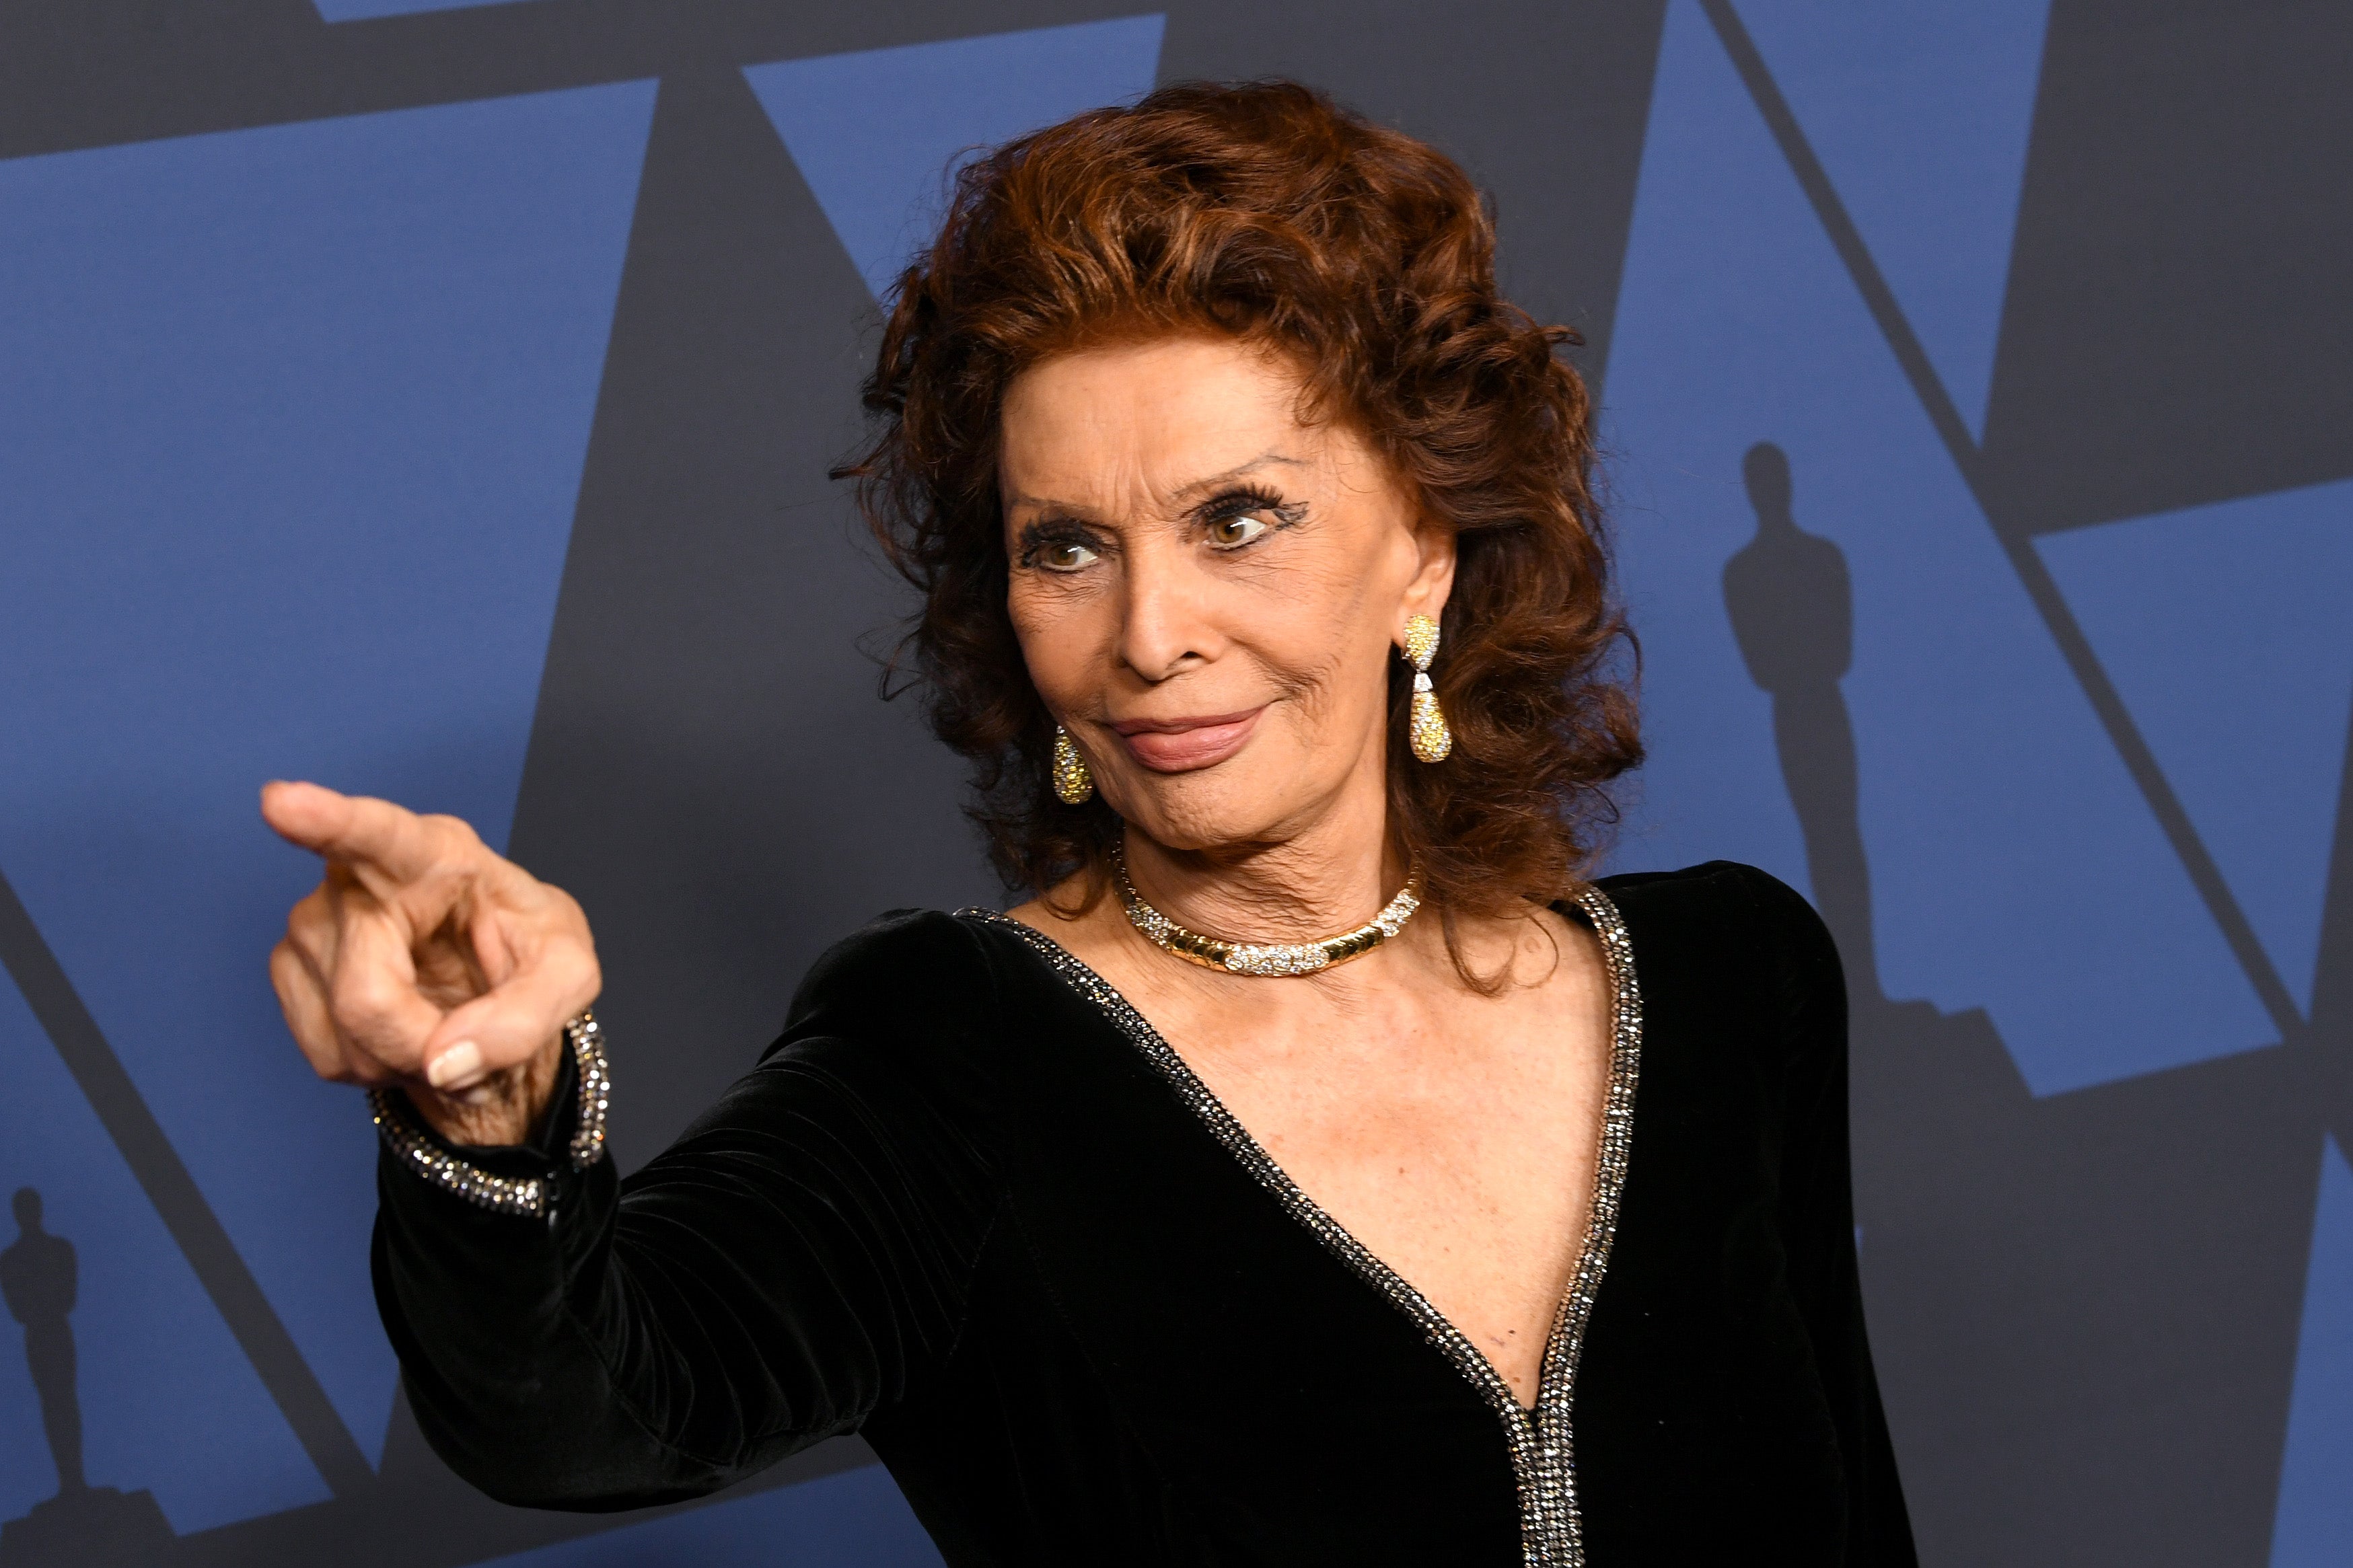 The film’s message of tolerance drew Sophia Loren back to acting